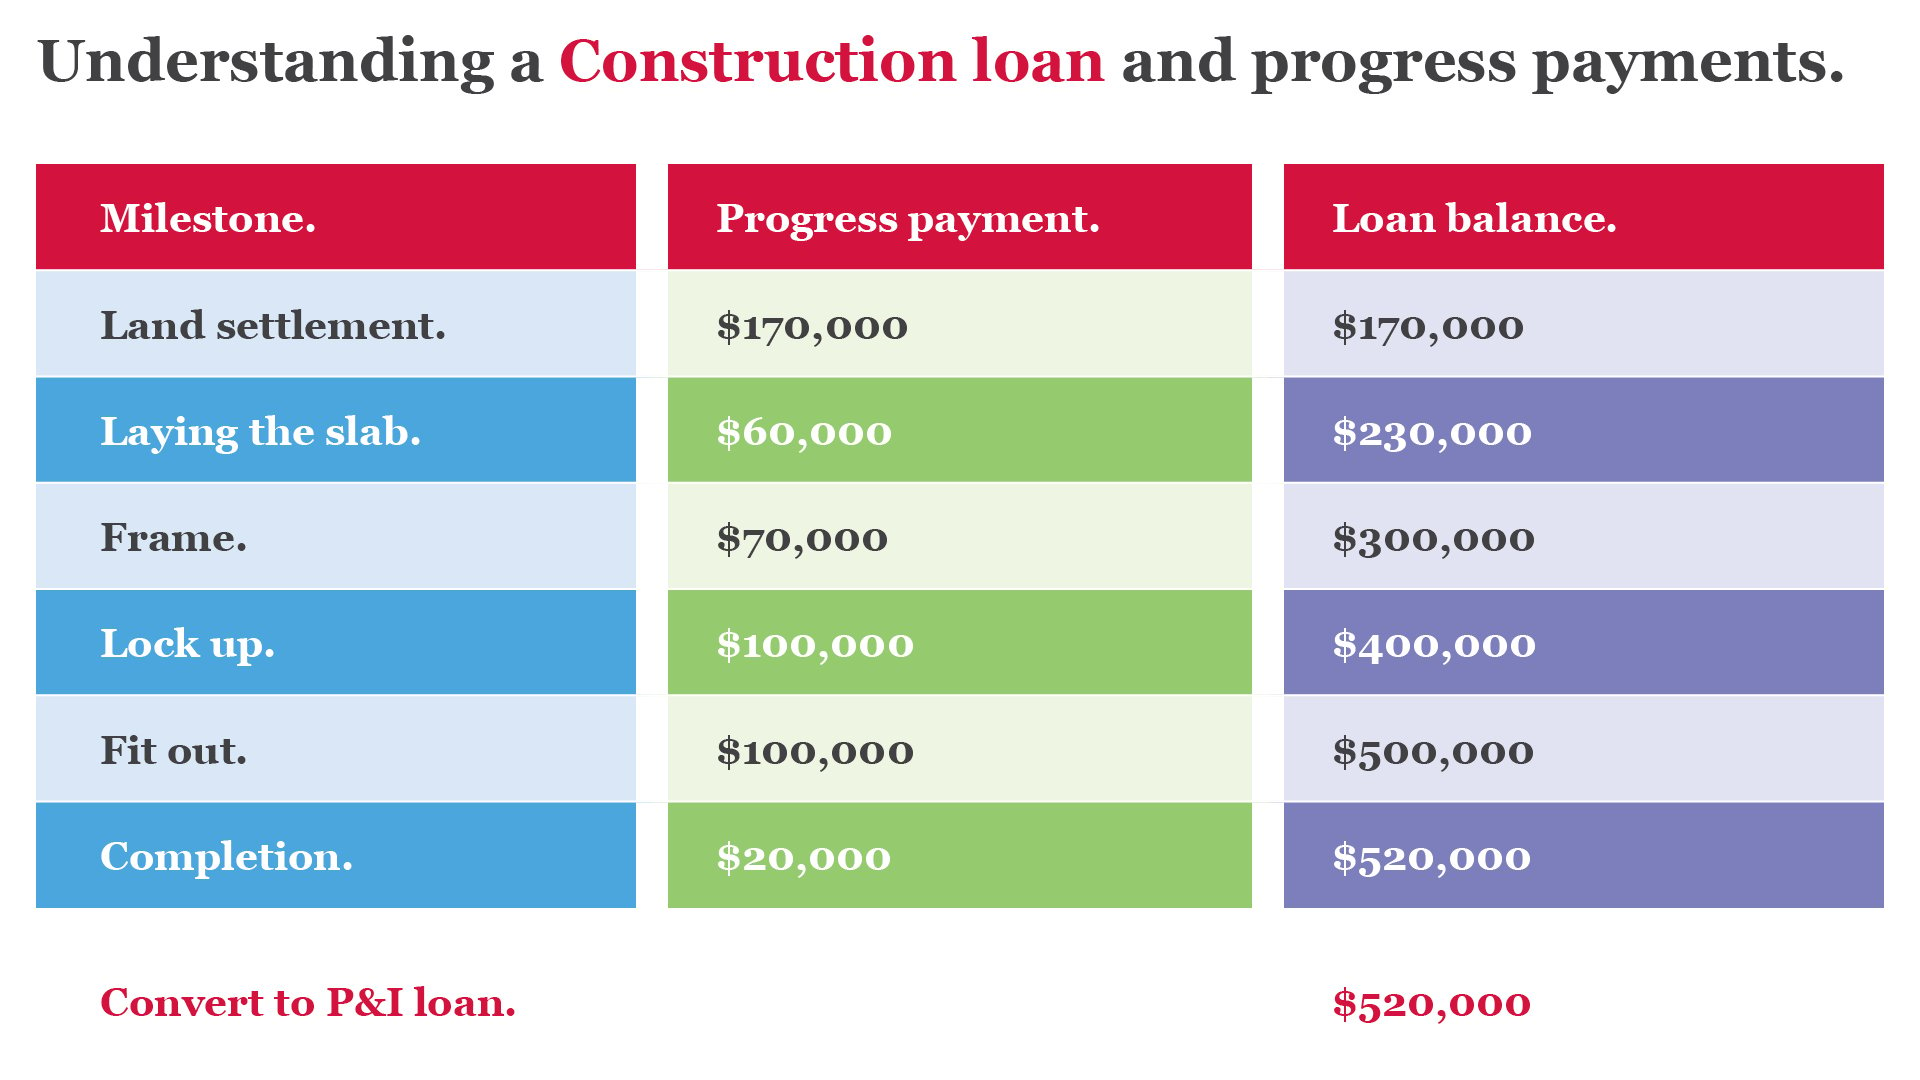 CAM00578-Construction Loan Graphic.jpg